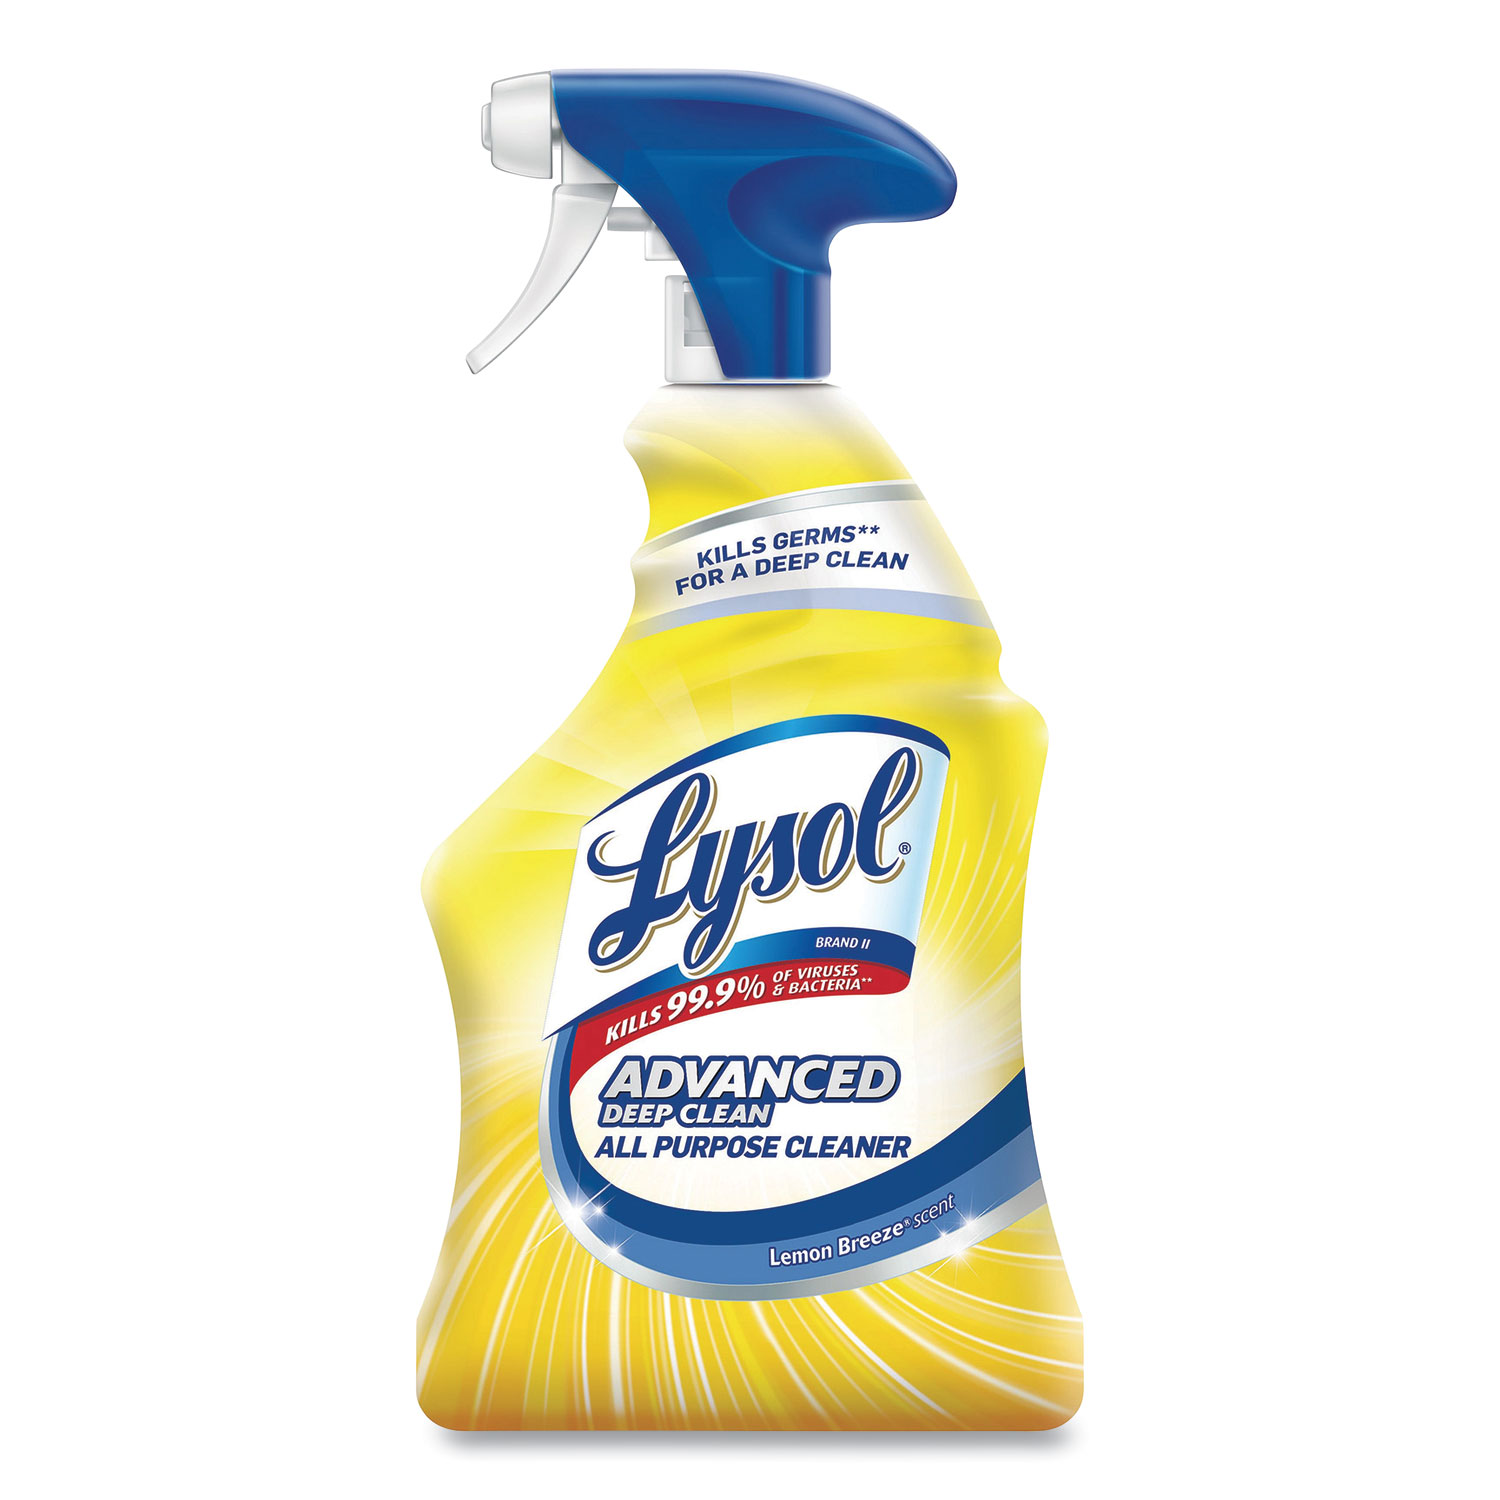  Professional LYSOL Brand 19200-00351 Advanced Deep Clean All Purpose Cleaner, Lemon Breeze, 32 oz Trigger Spray Bottle, 12/Carton (RAC00351) 